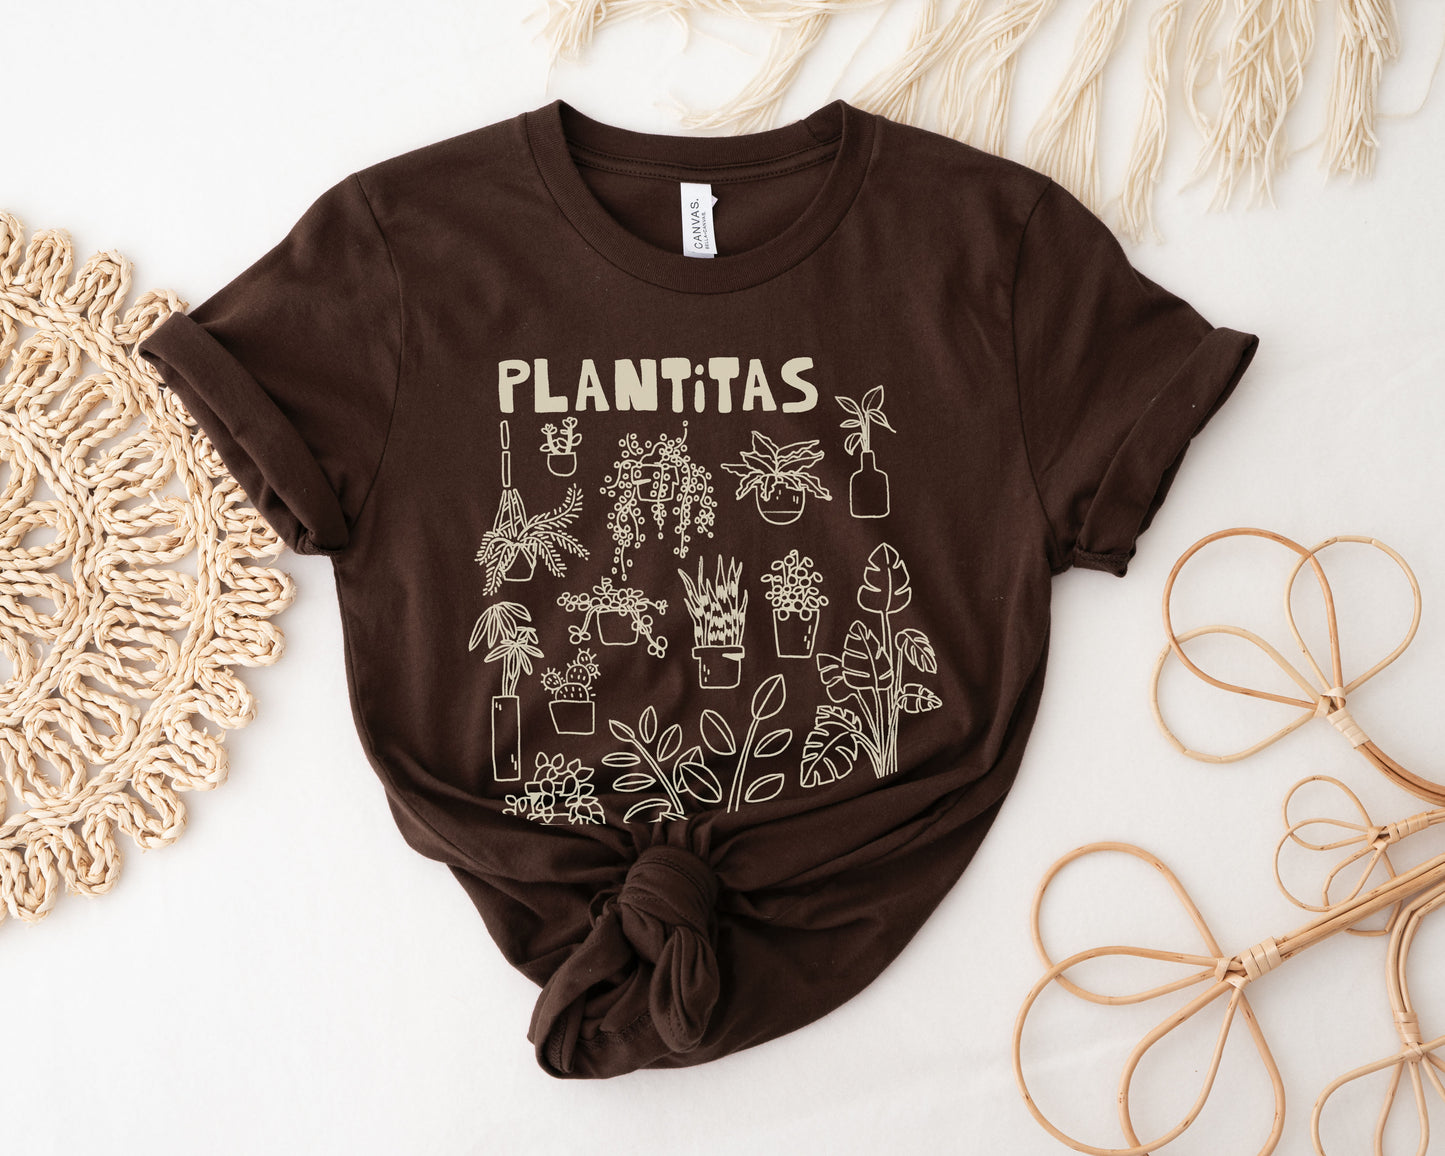 Plantitas y Mas Plantitas Tee | Plant Shirt 100% Cotton